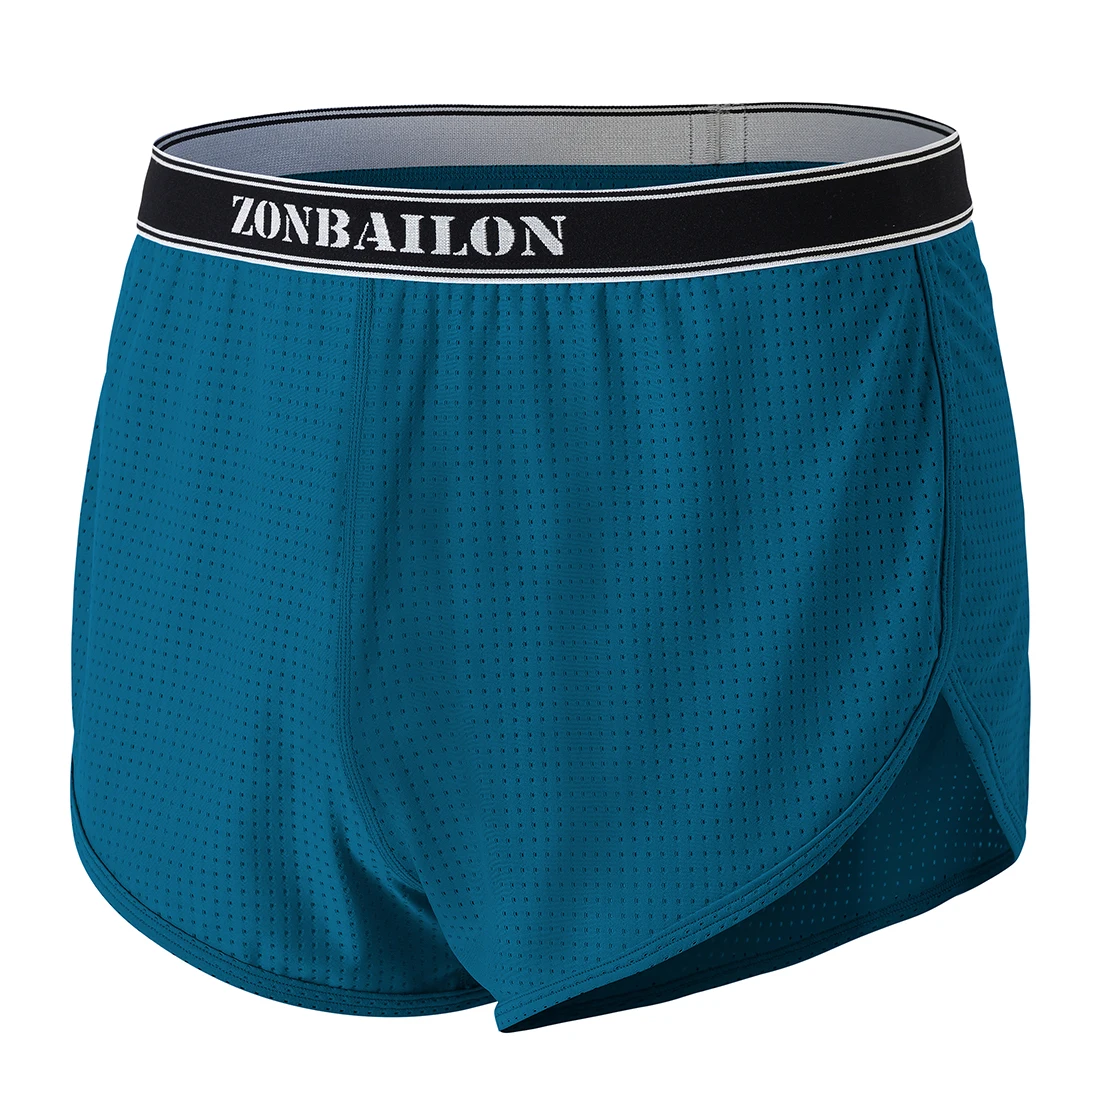 Zonbailon New Men's Boxer Underwear SexyFull Coverage Hip with Low